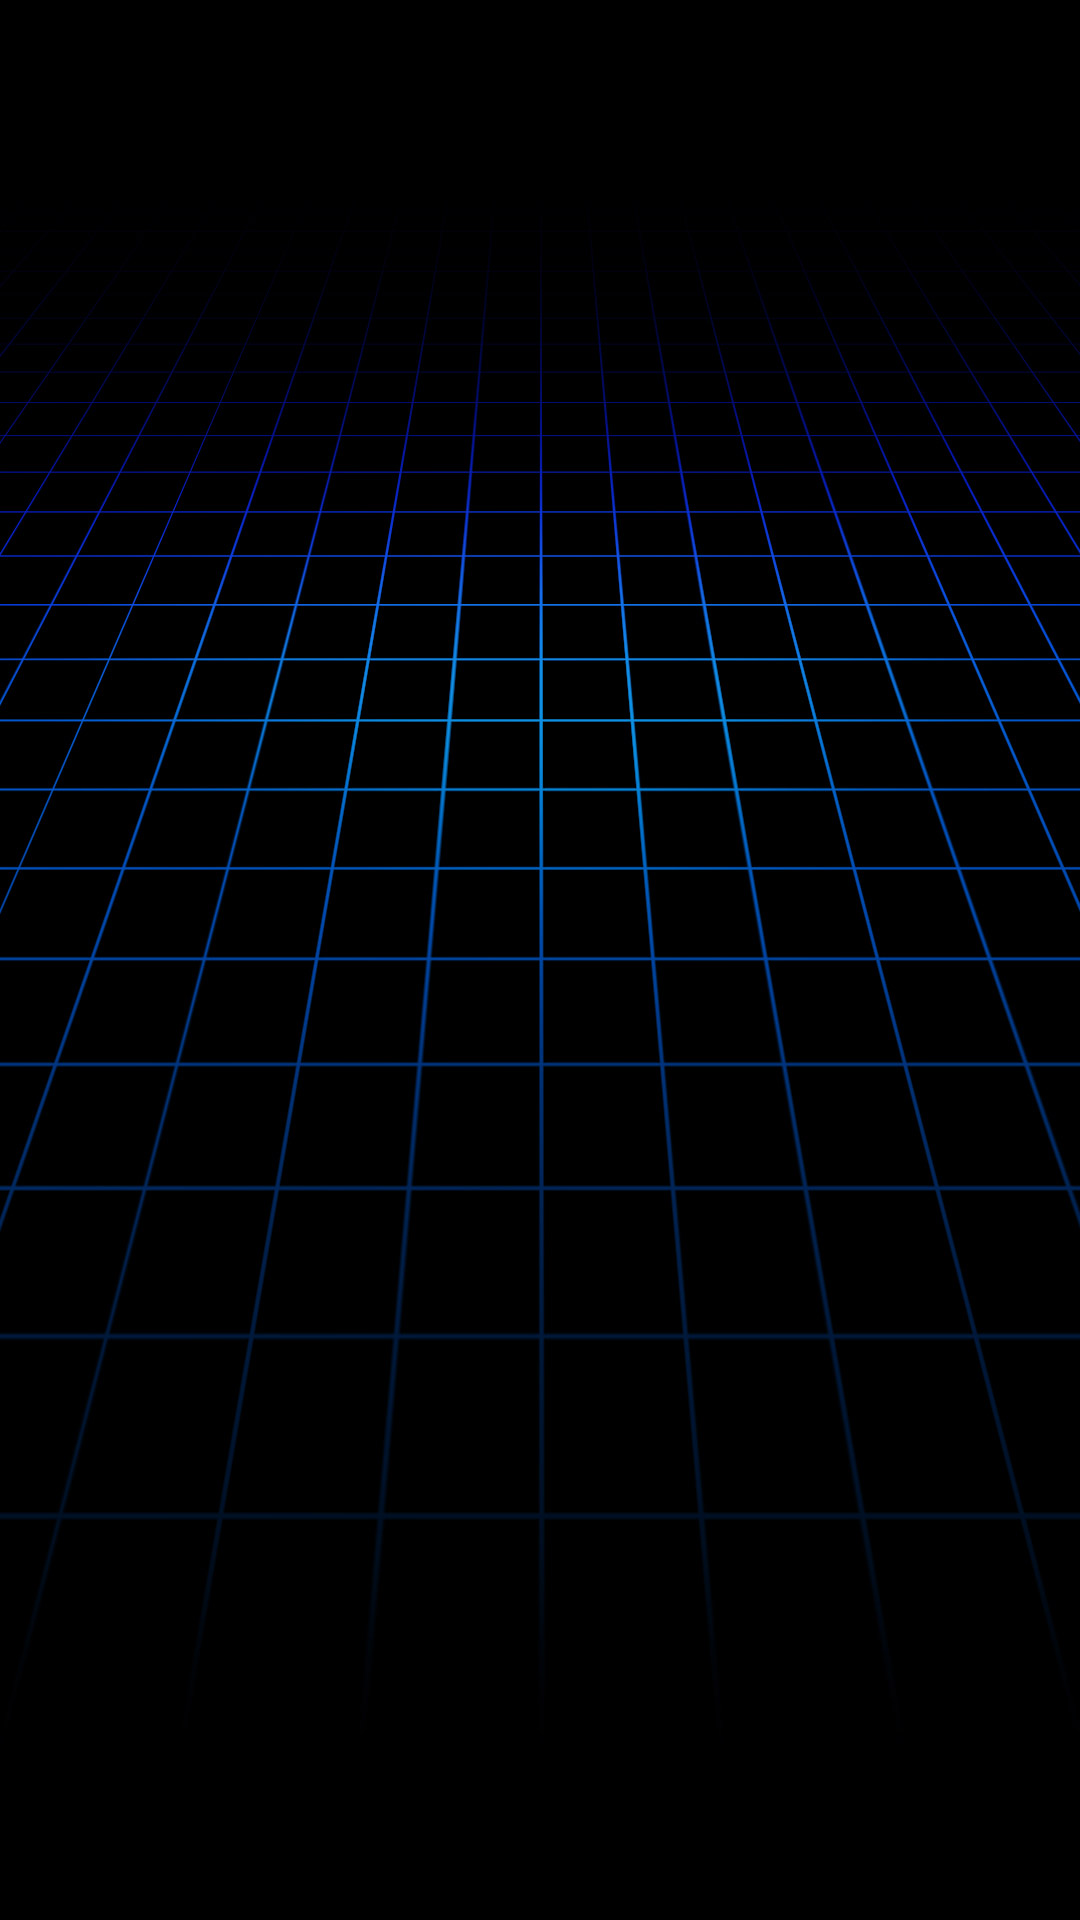 black grid wallpaper for phone